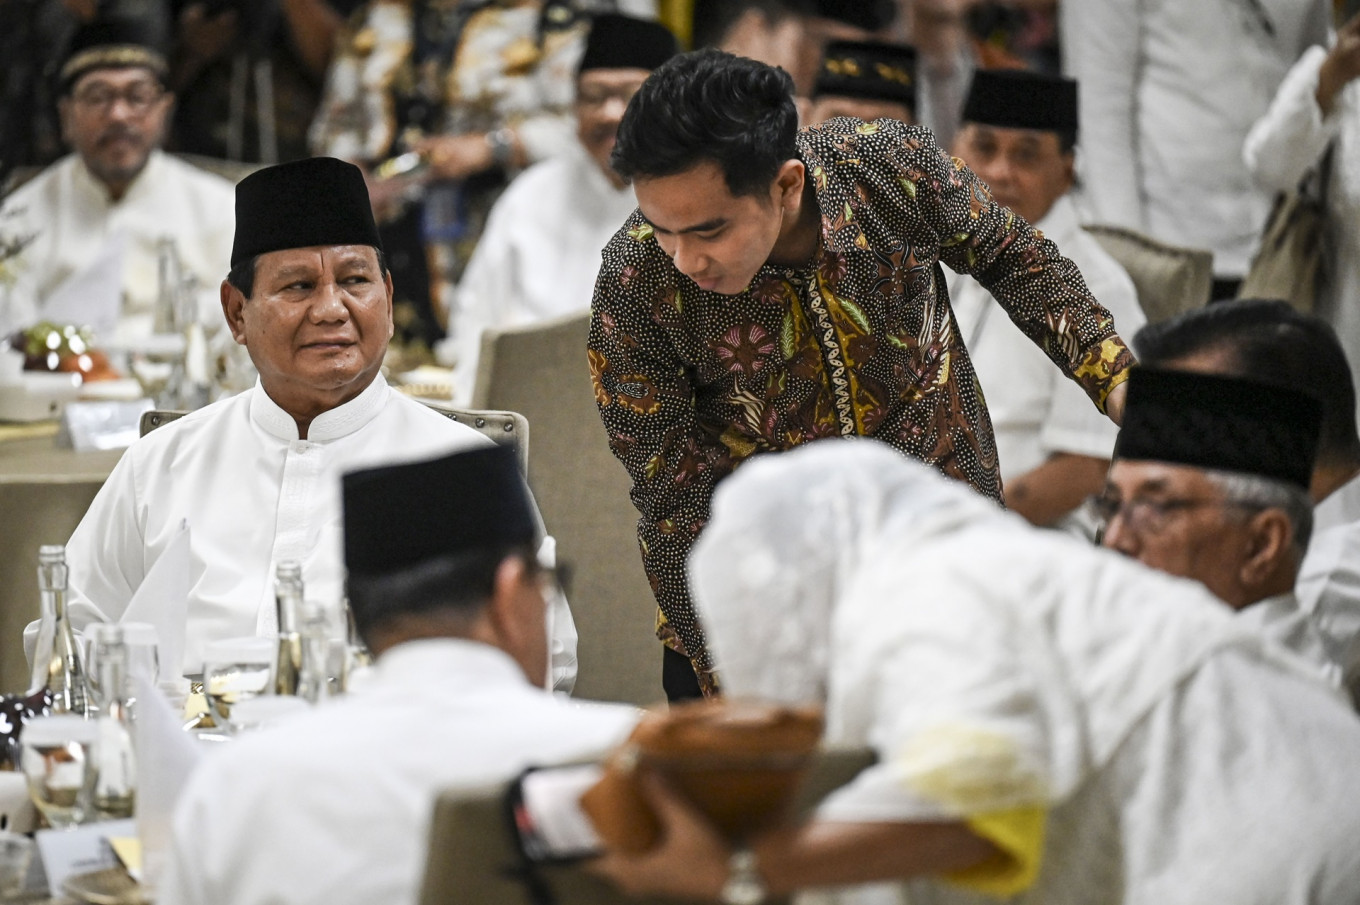 Prabowo shores up support for incoming government via Idul Fitri ‘safari’